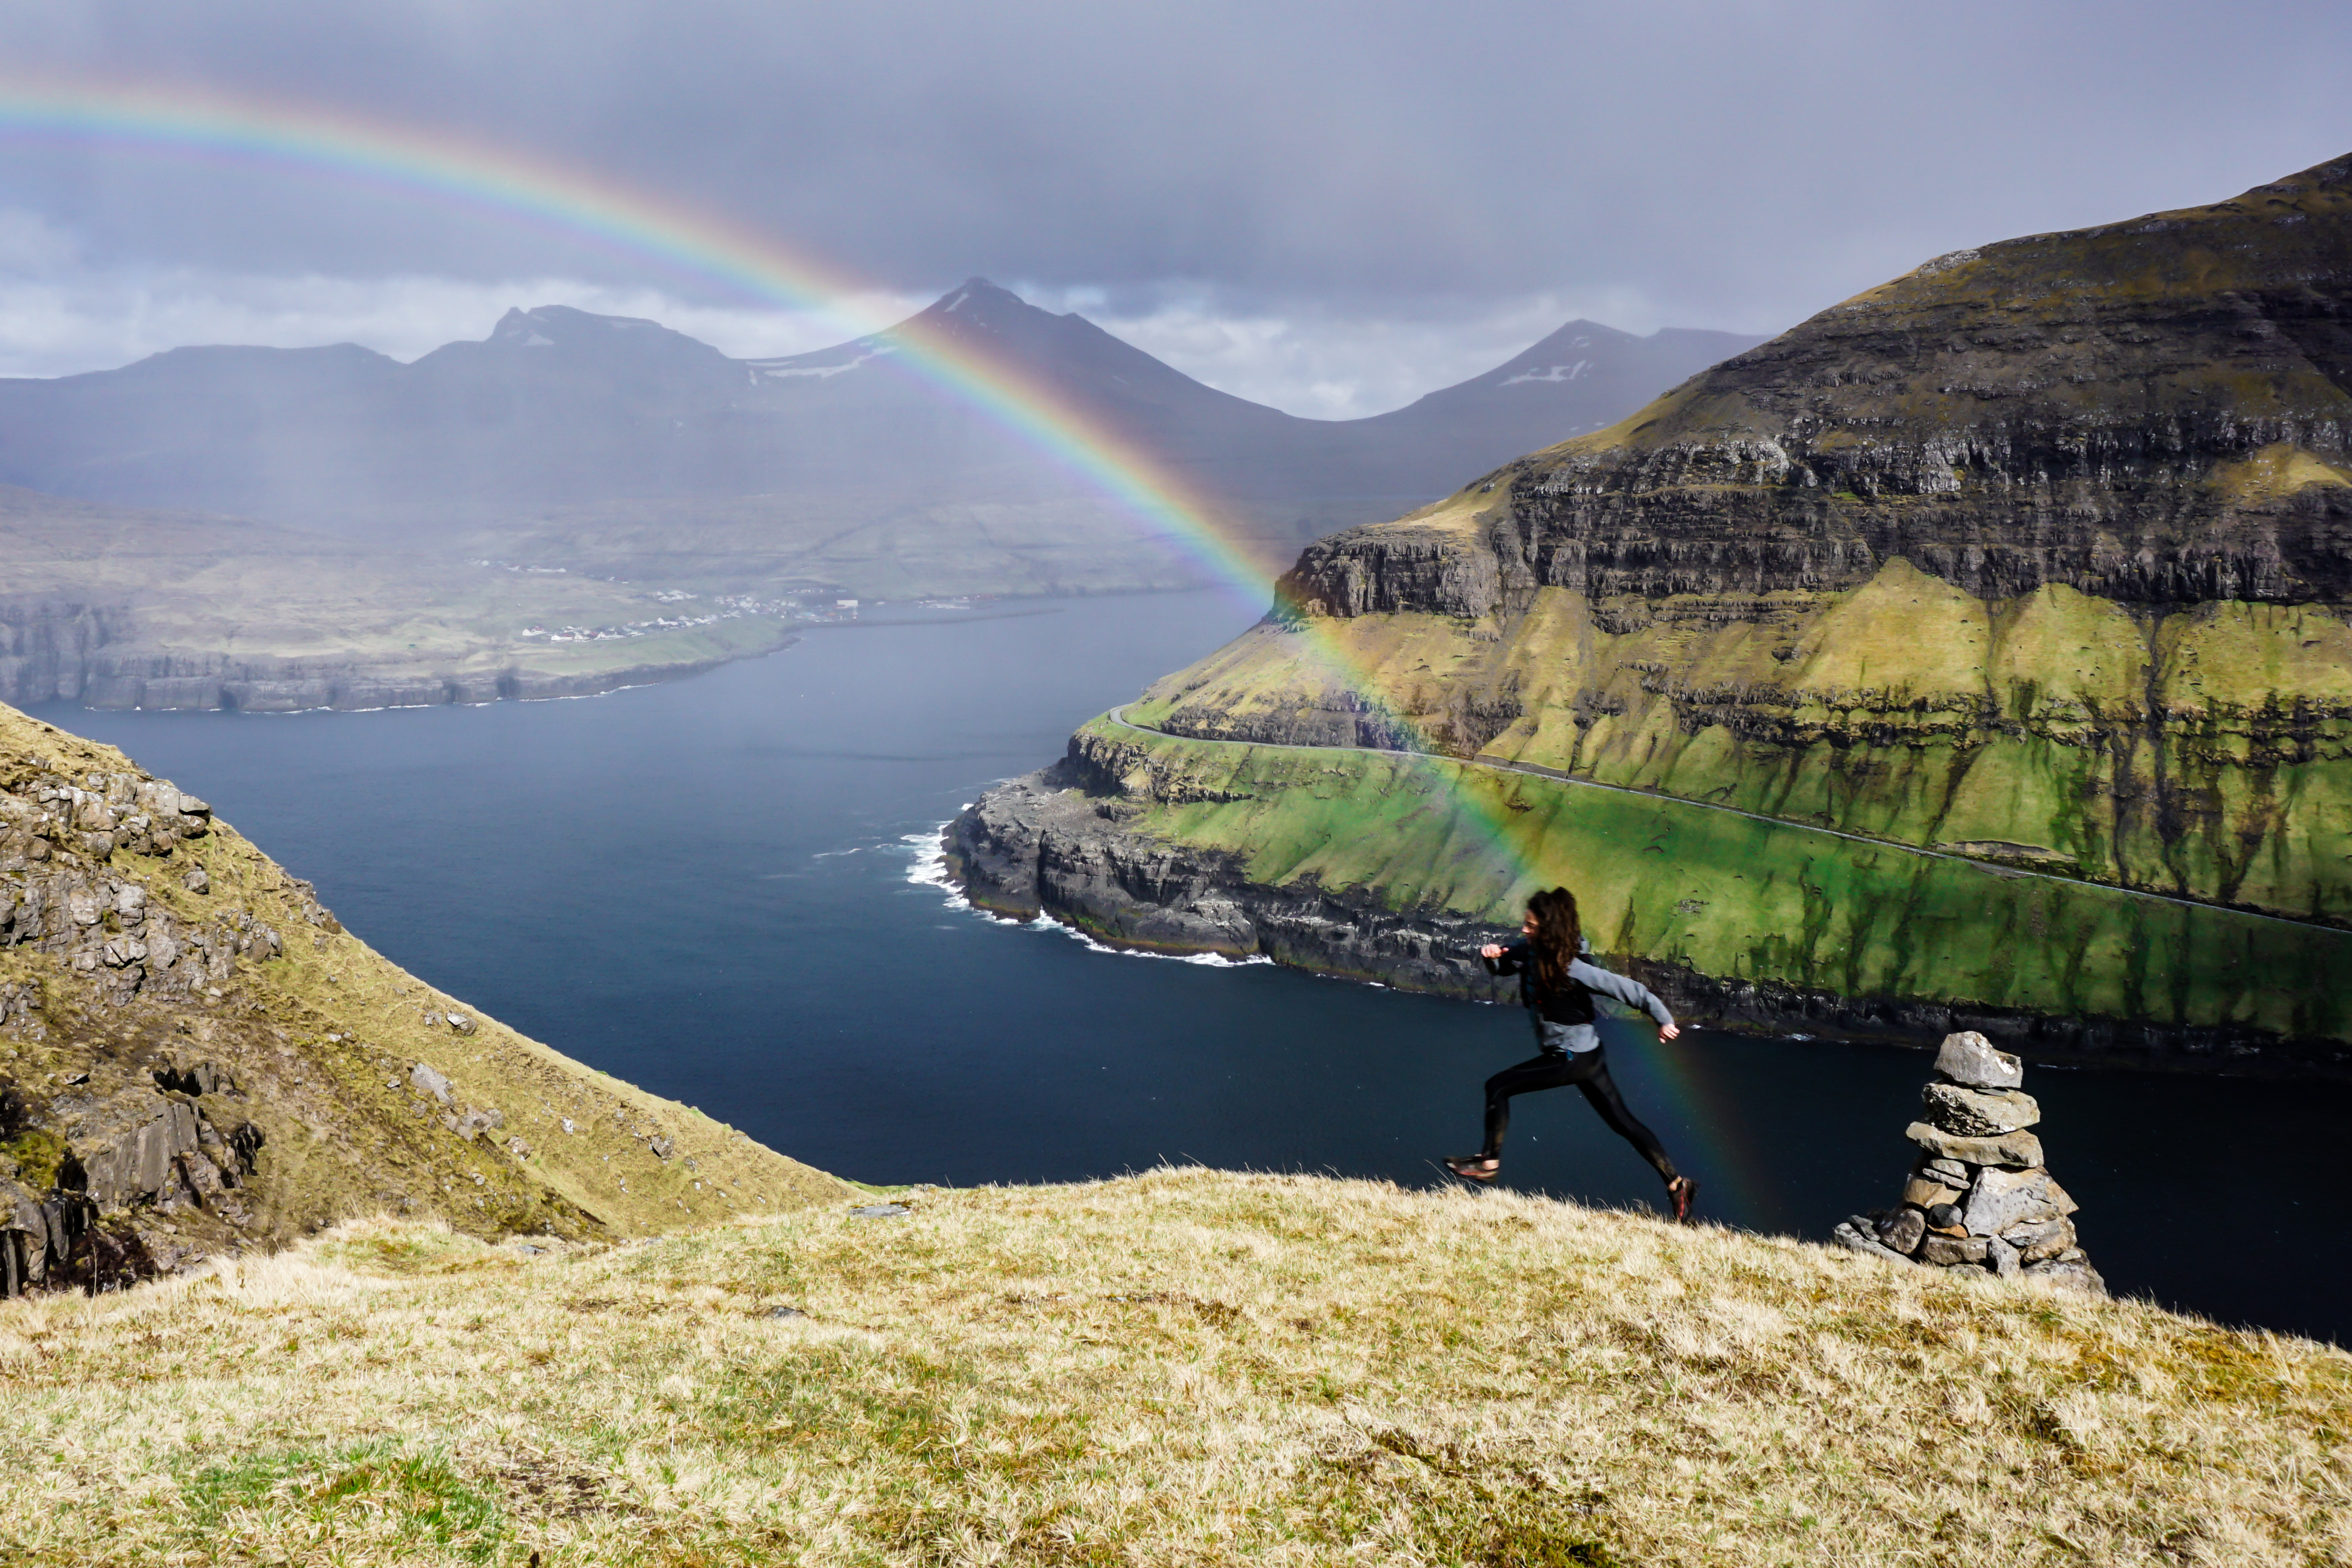 The 2018 Útilív Adventure Festival in the Faroe Islands